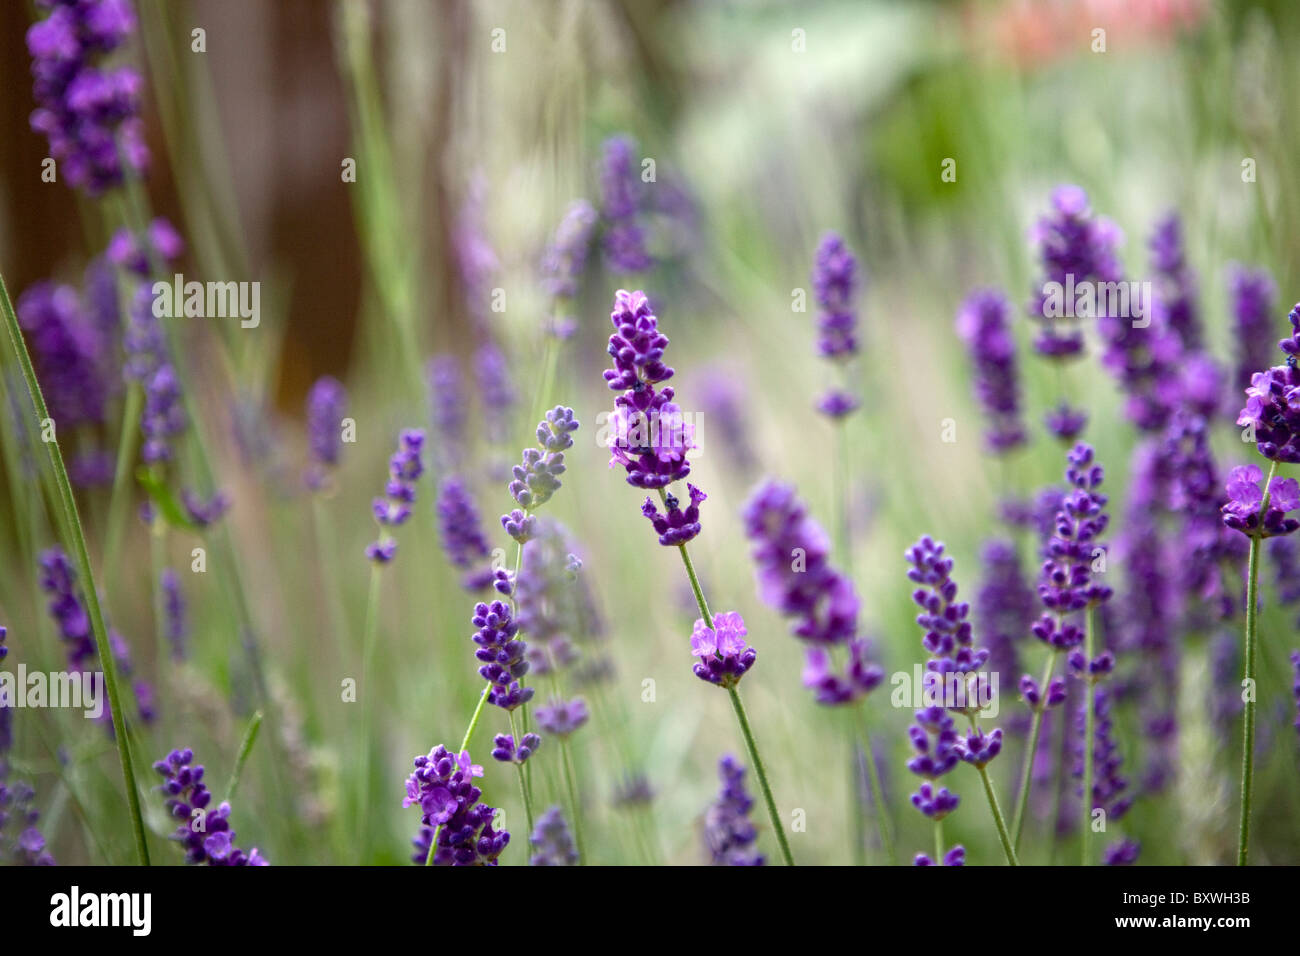 A Lavender plant Stock Photo